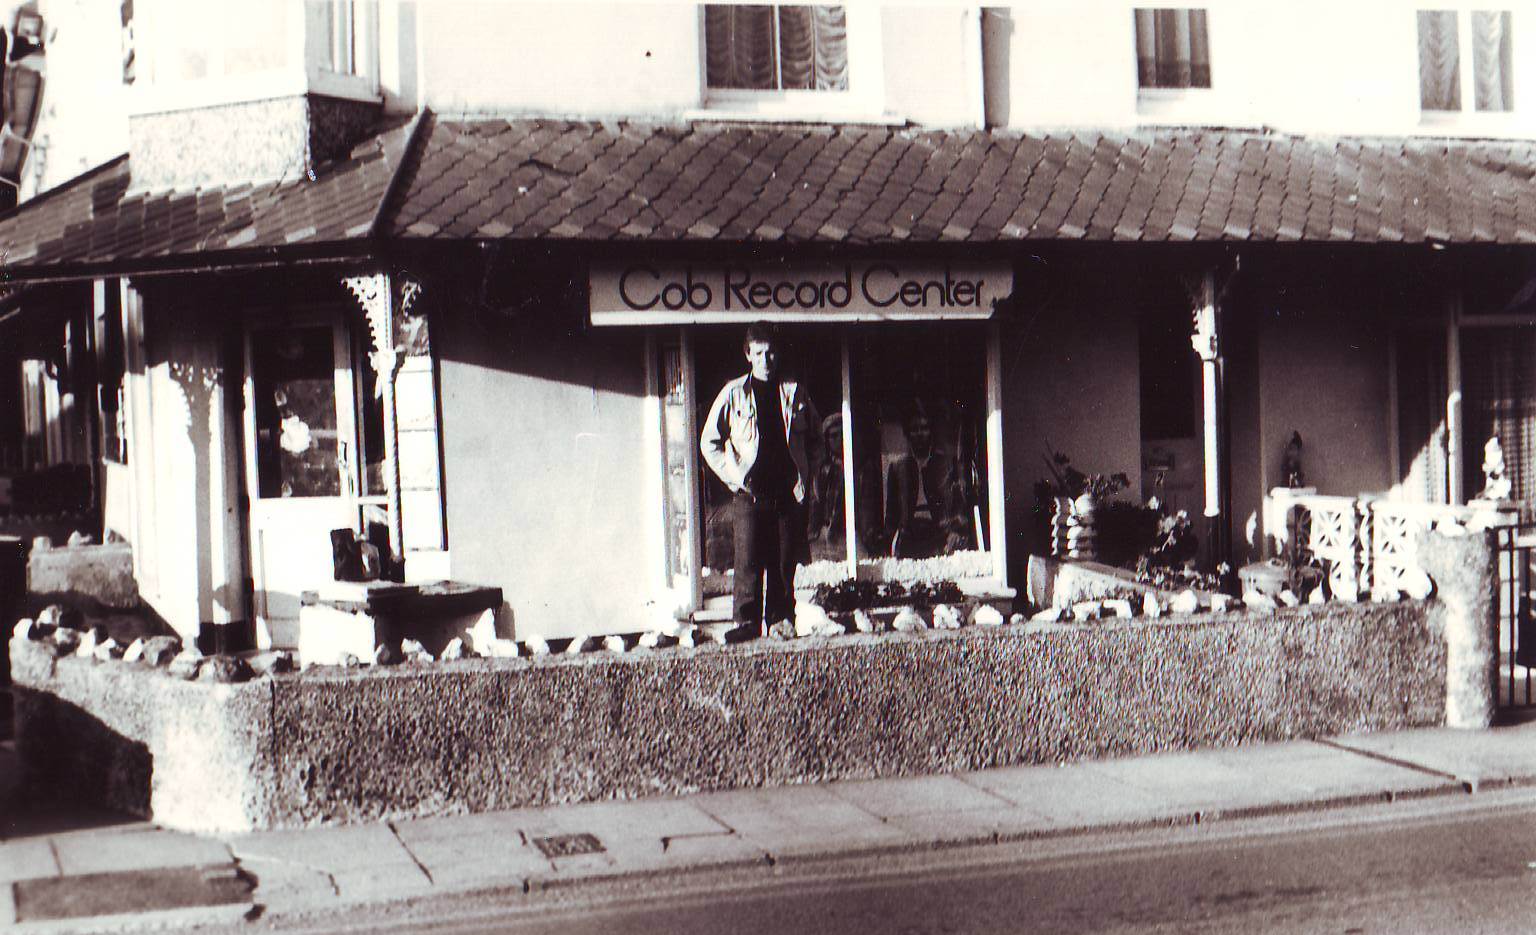 Mlađani Peacock početkom osamdesetih ispred Cob Records Shopa u Porthmadogu, Wales.